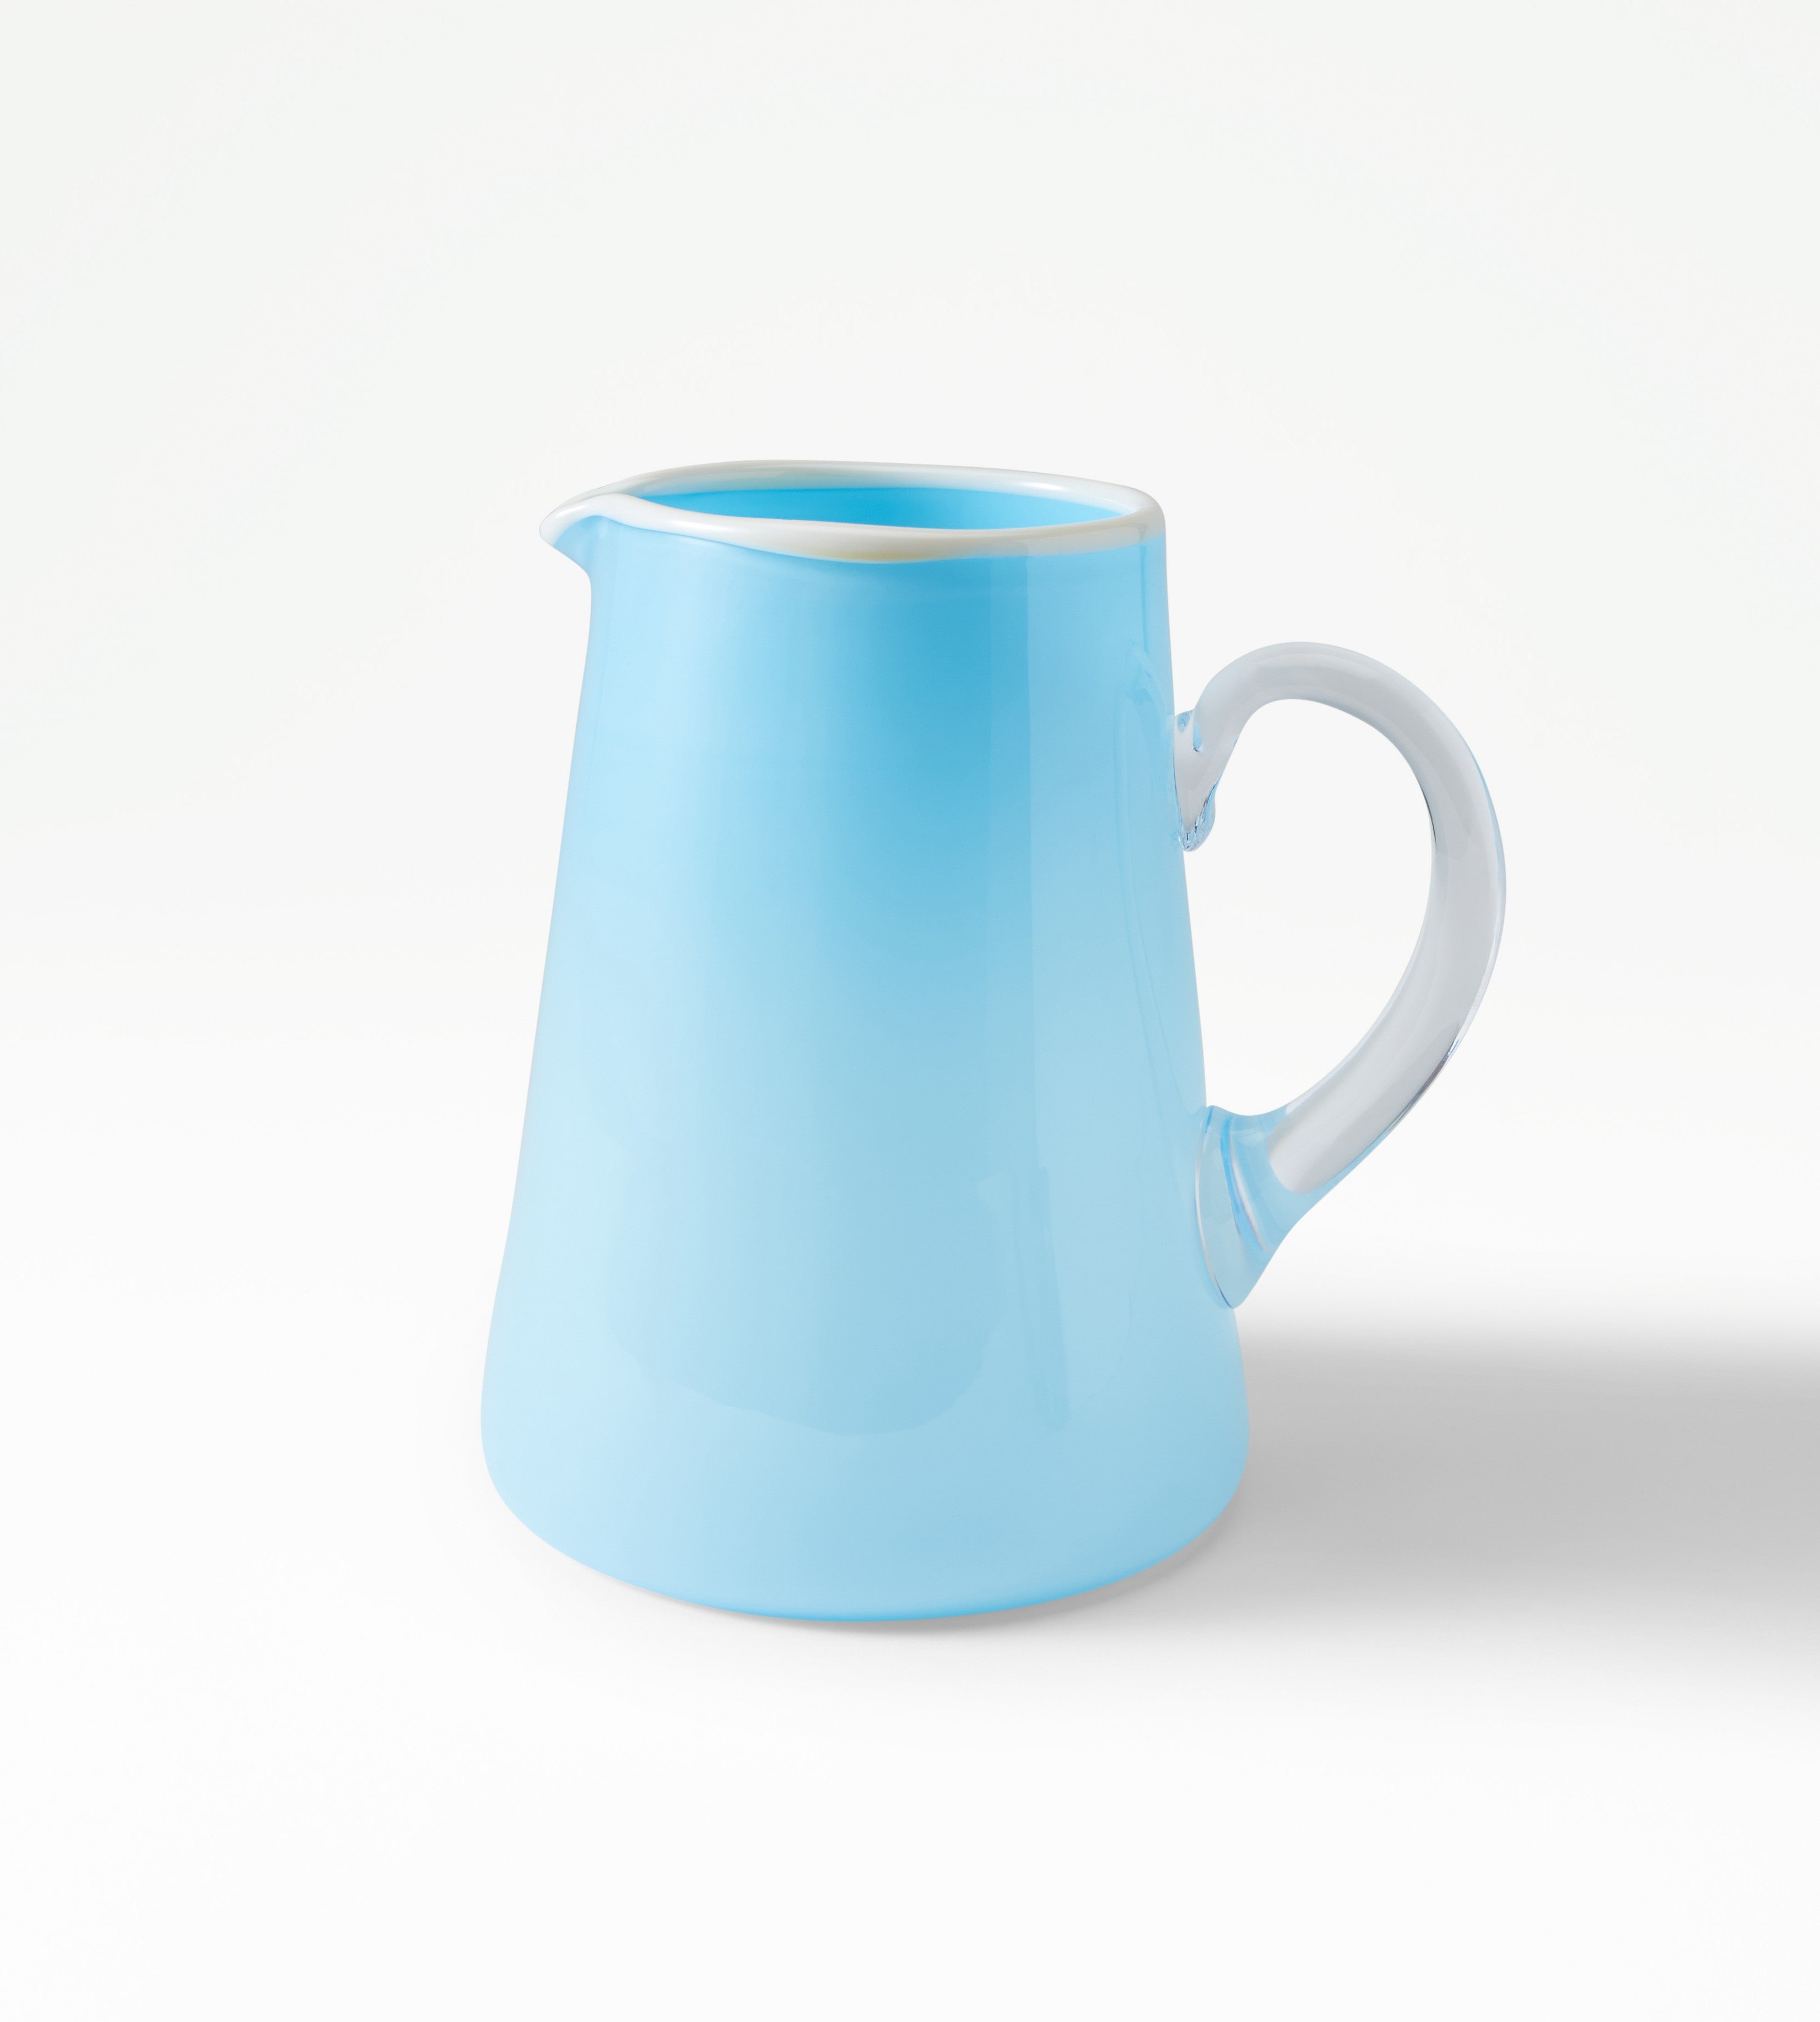 Handblown jug